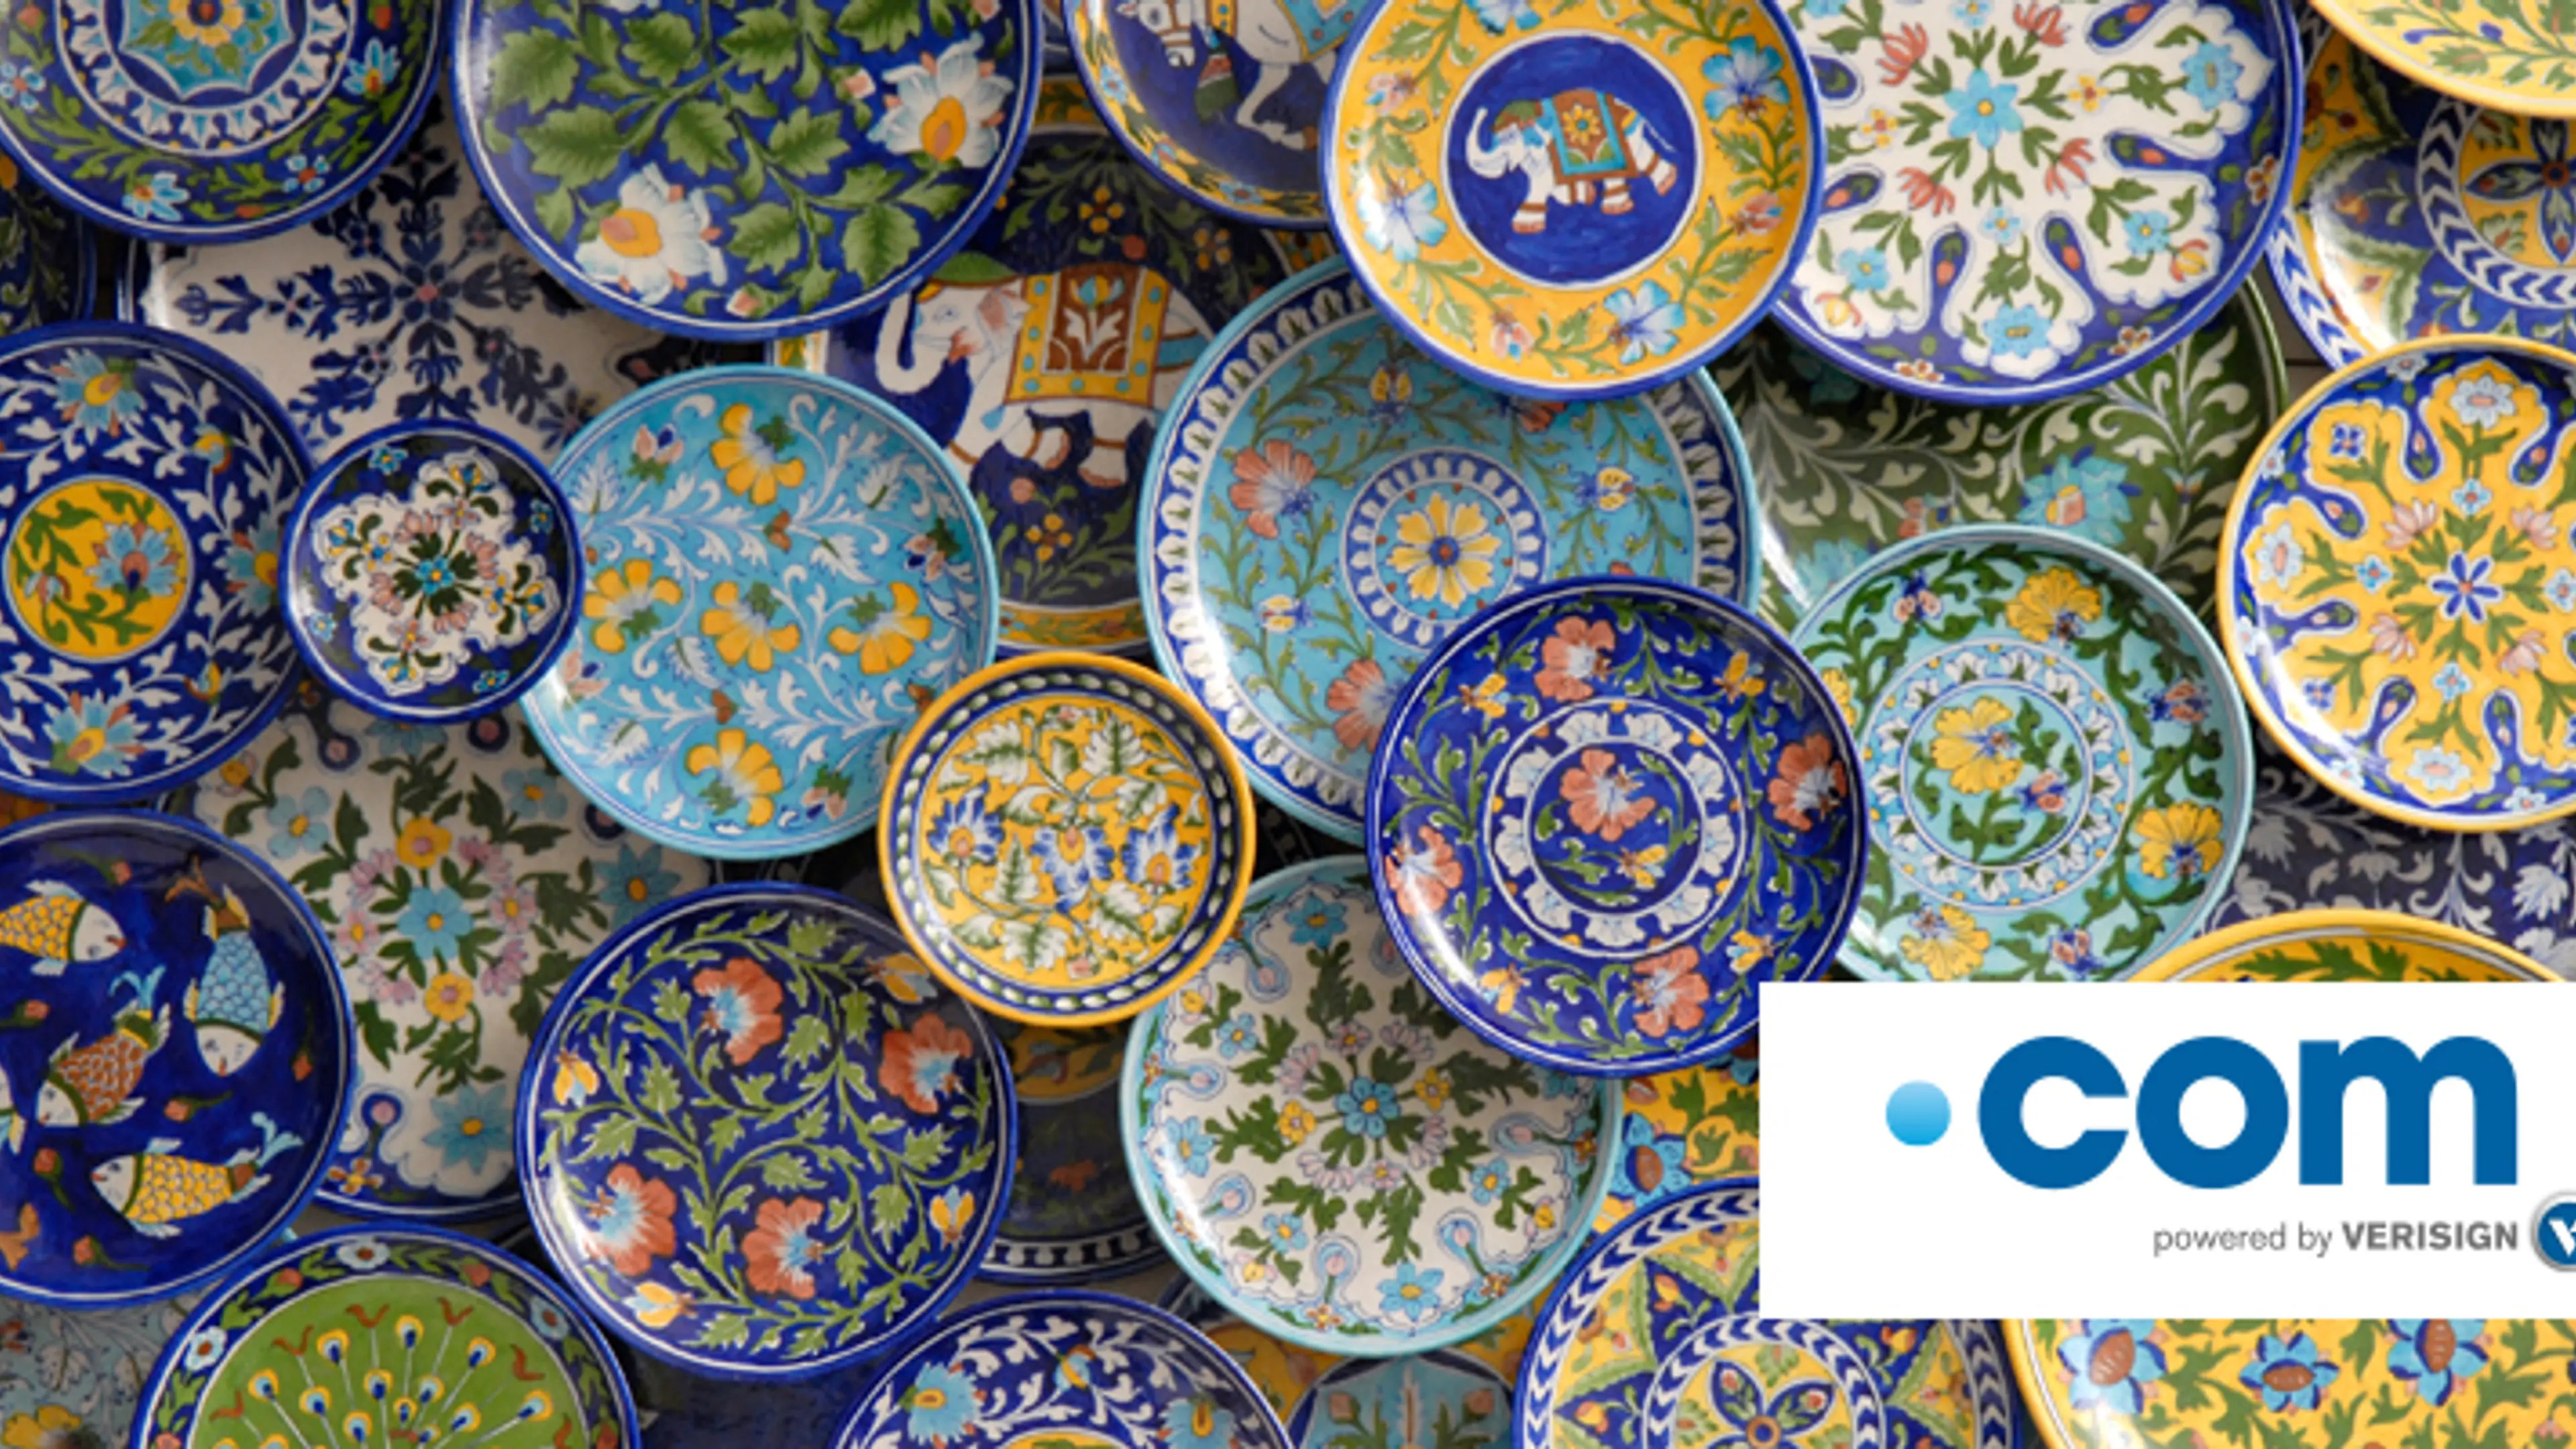 Neerja International gave Blue pottery a modern twist for mass appeal